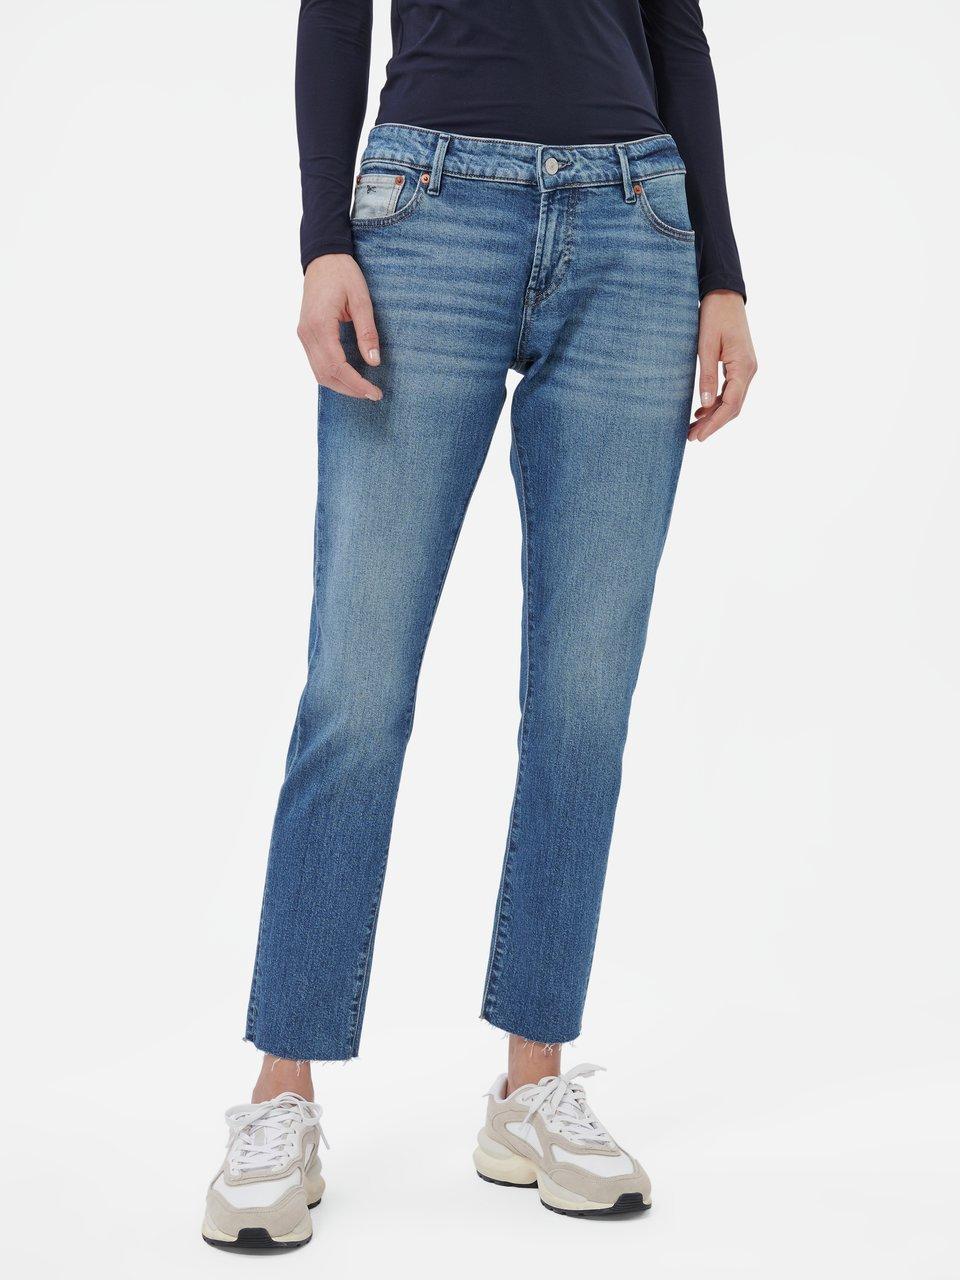 Denham - Jeans "Monroe" in Inch-Länge 30